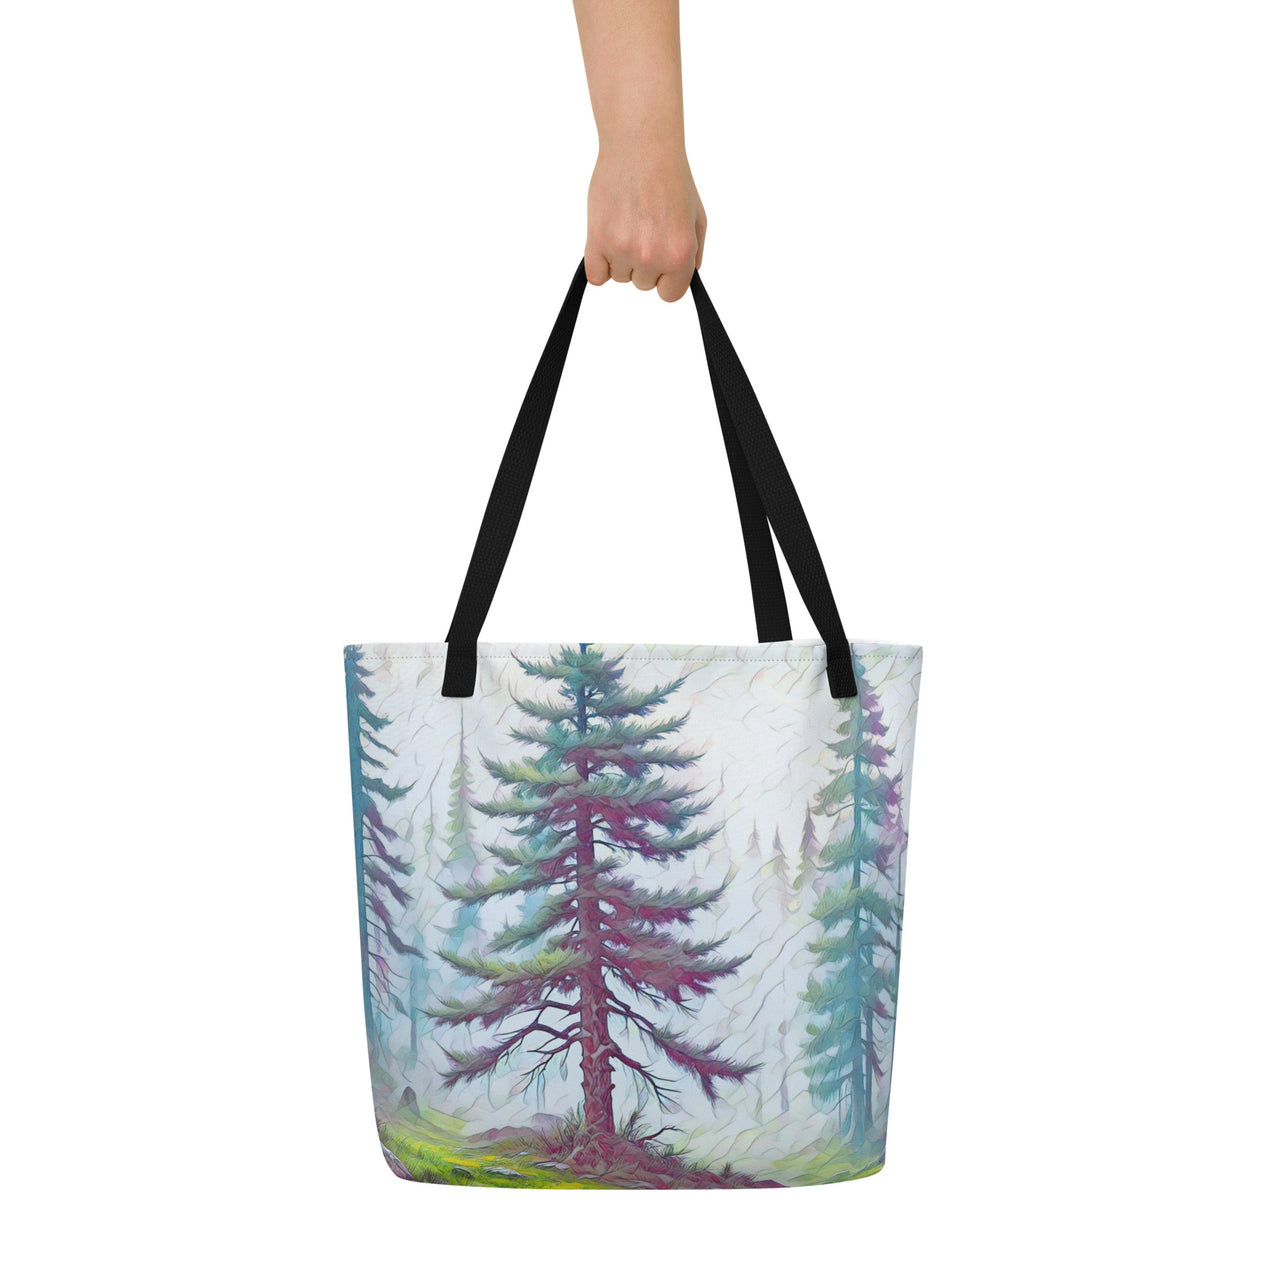 Into the Oregon Woods - Digital Art - Large 16x20 Tote Bag W/Pocket